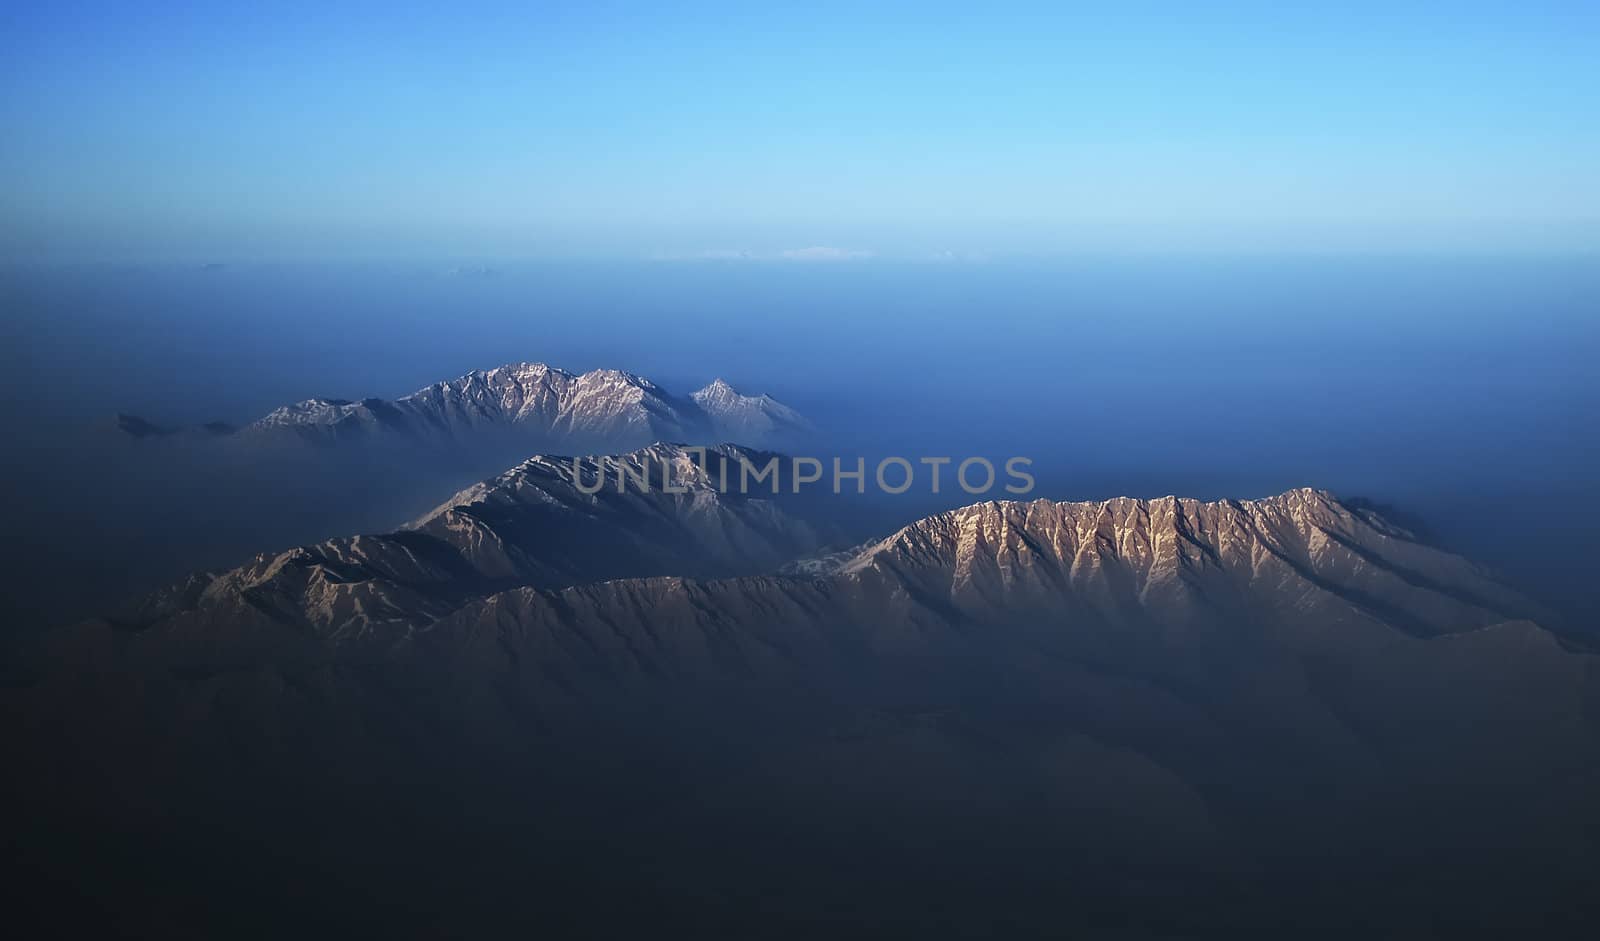 Iranian mountains by lillo